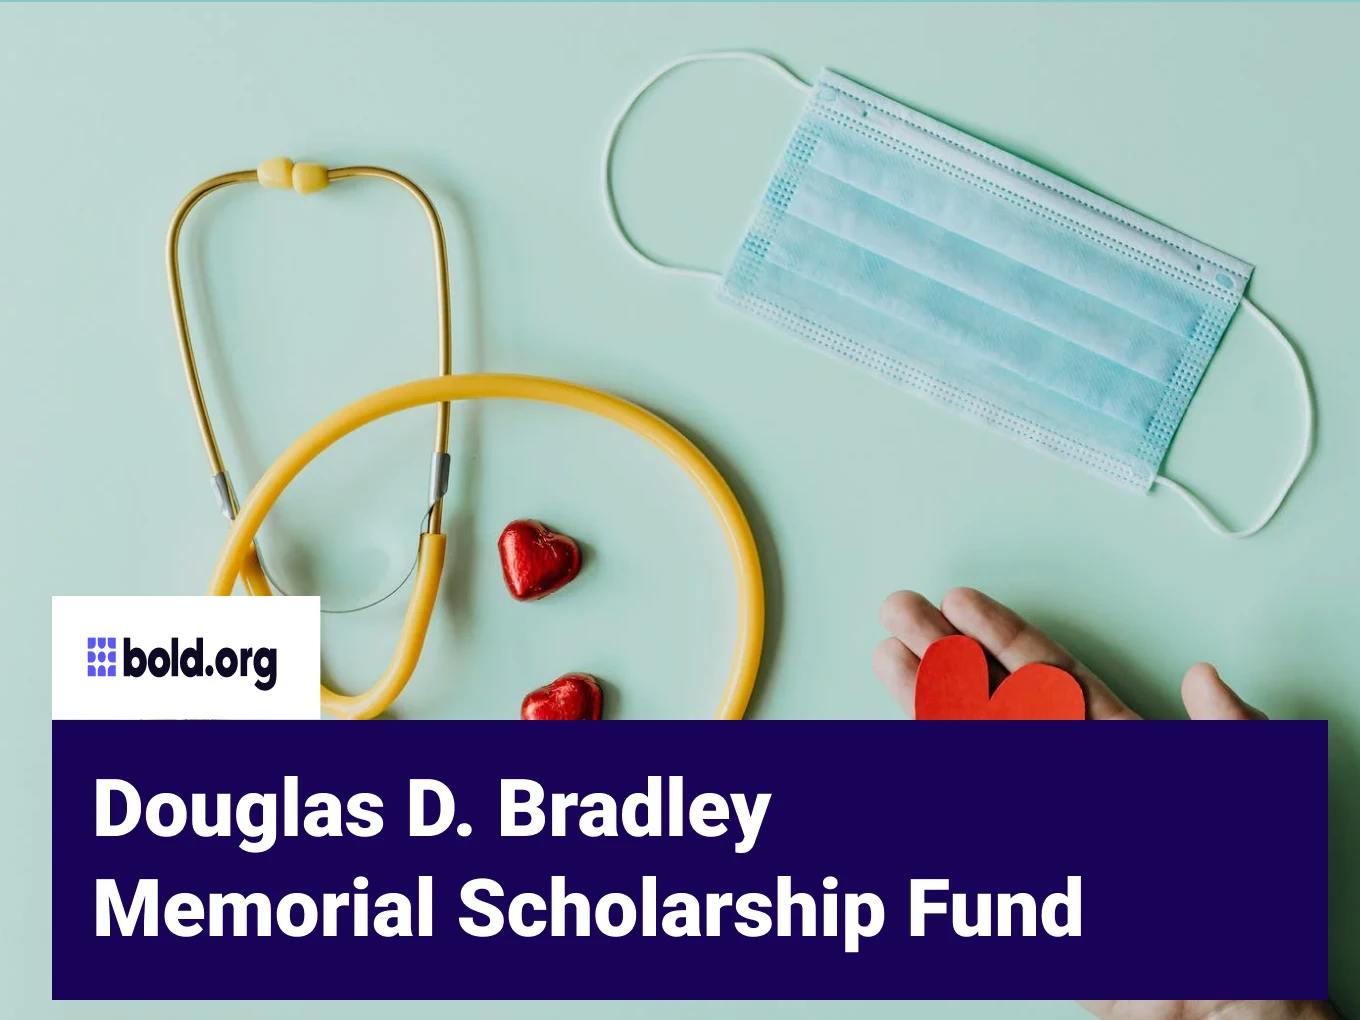 Douglas D. Bradley Memorial Scholarship Fund